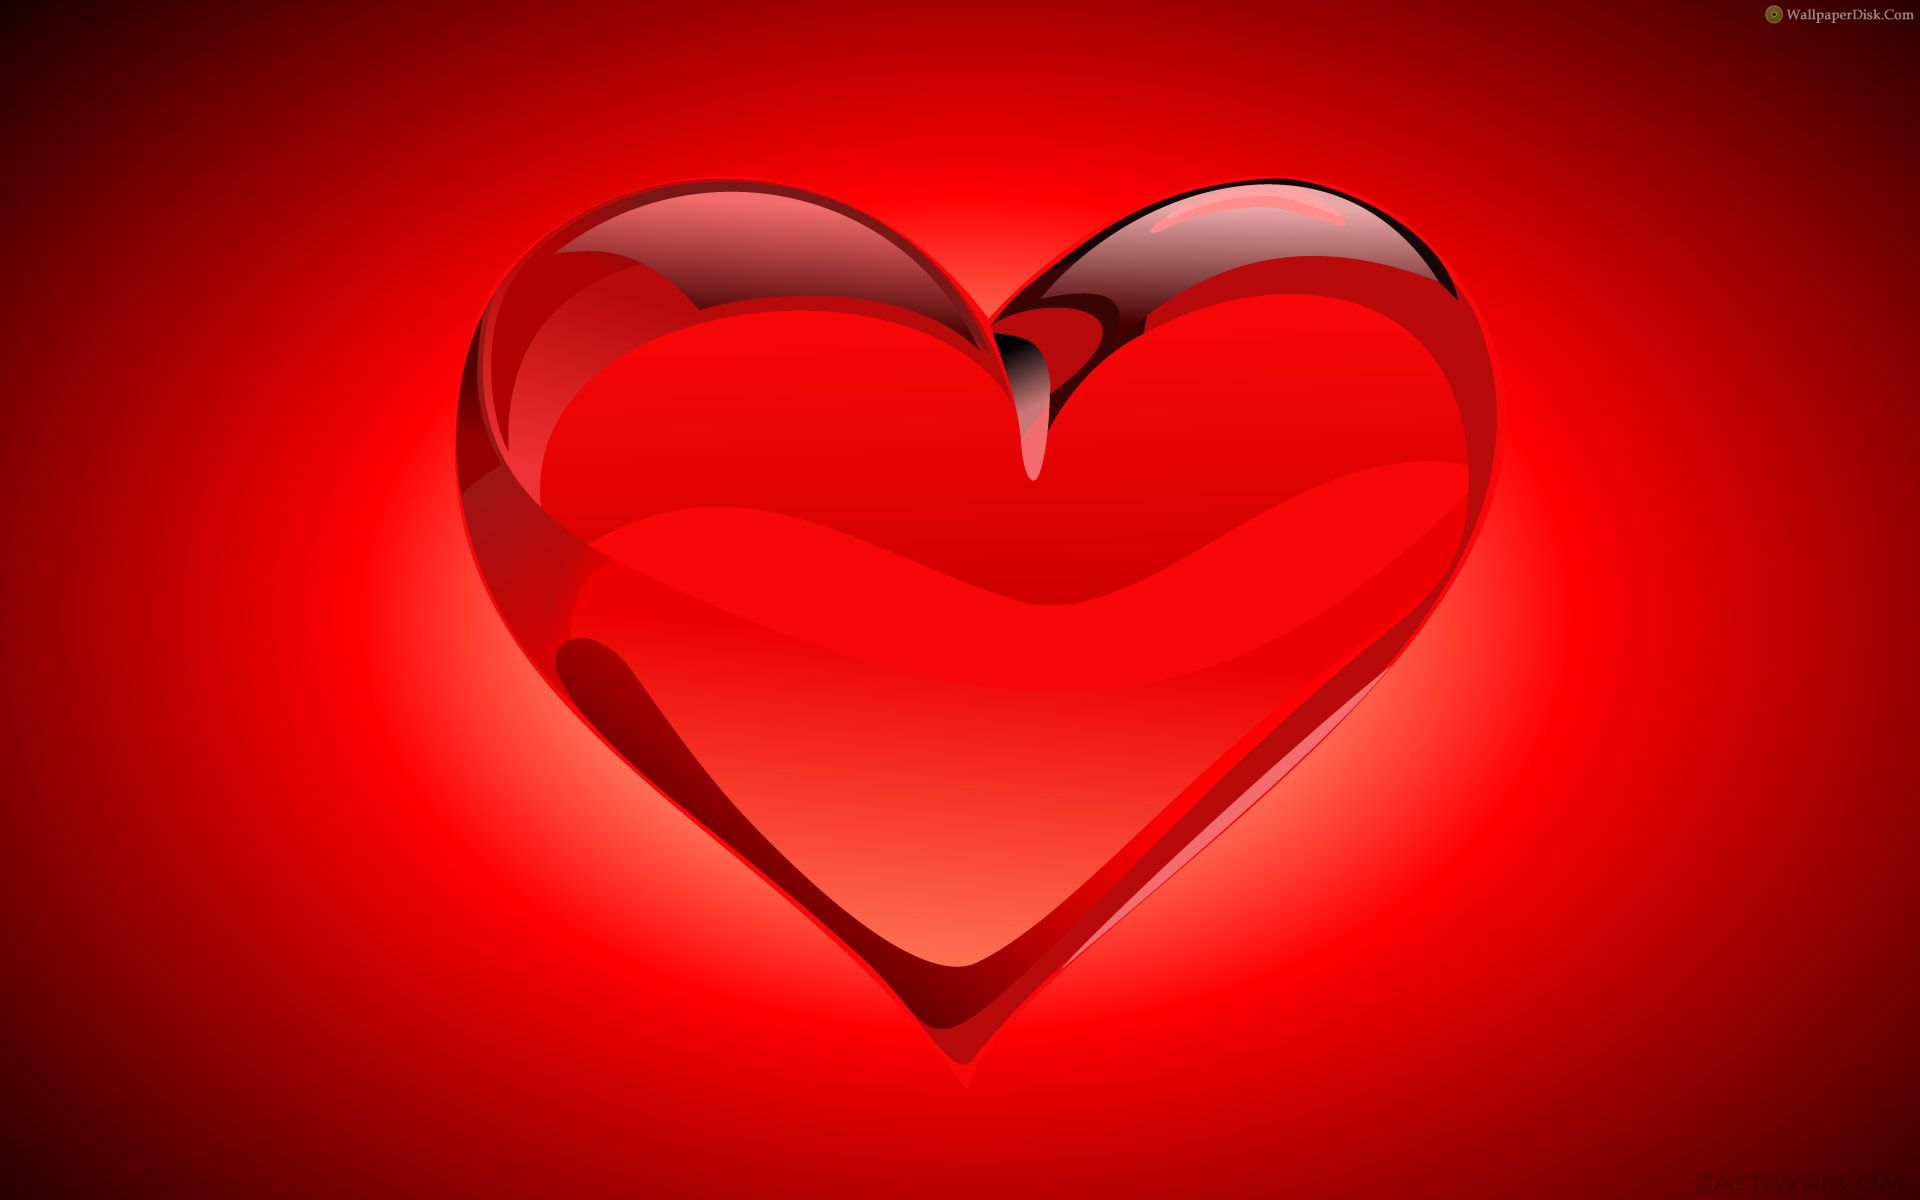 Best Crystal Red Heart Desktop Wallpaper Background Collection